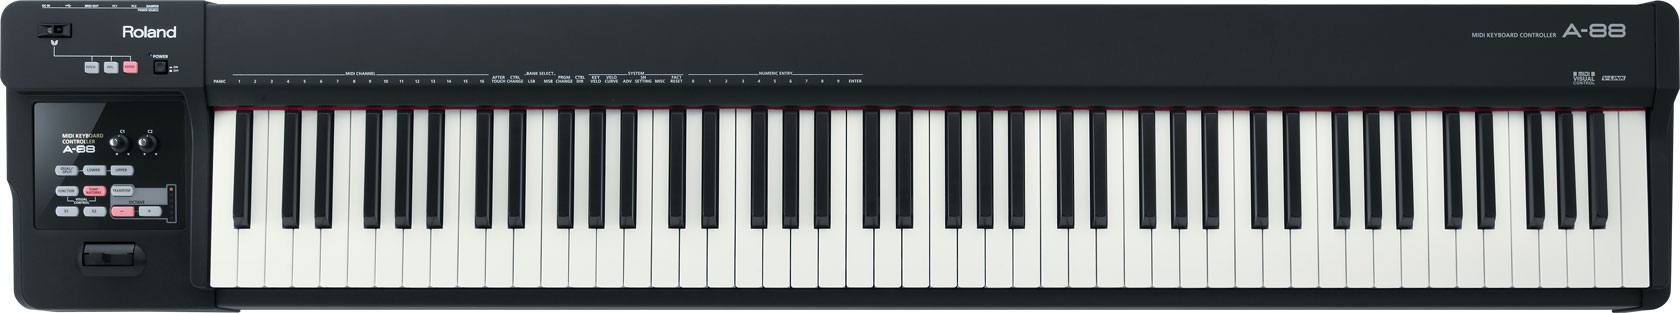 Roland - A-88 | MIDI Keyboard Controller